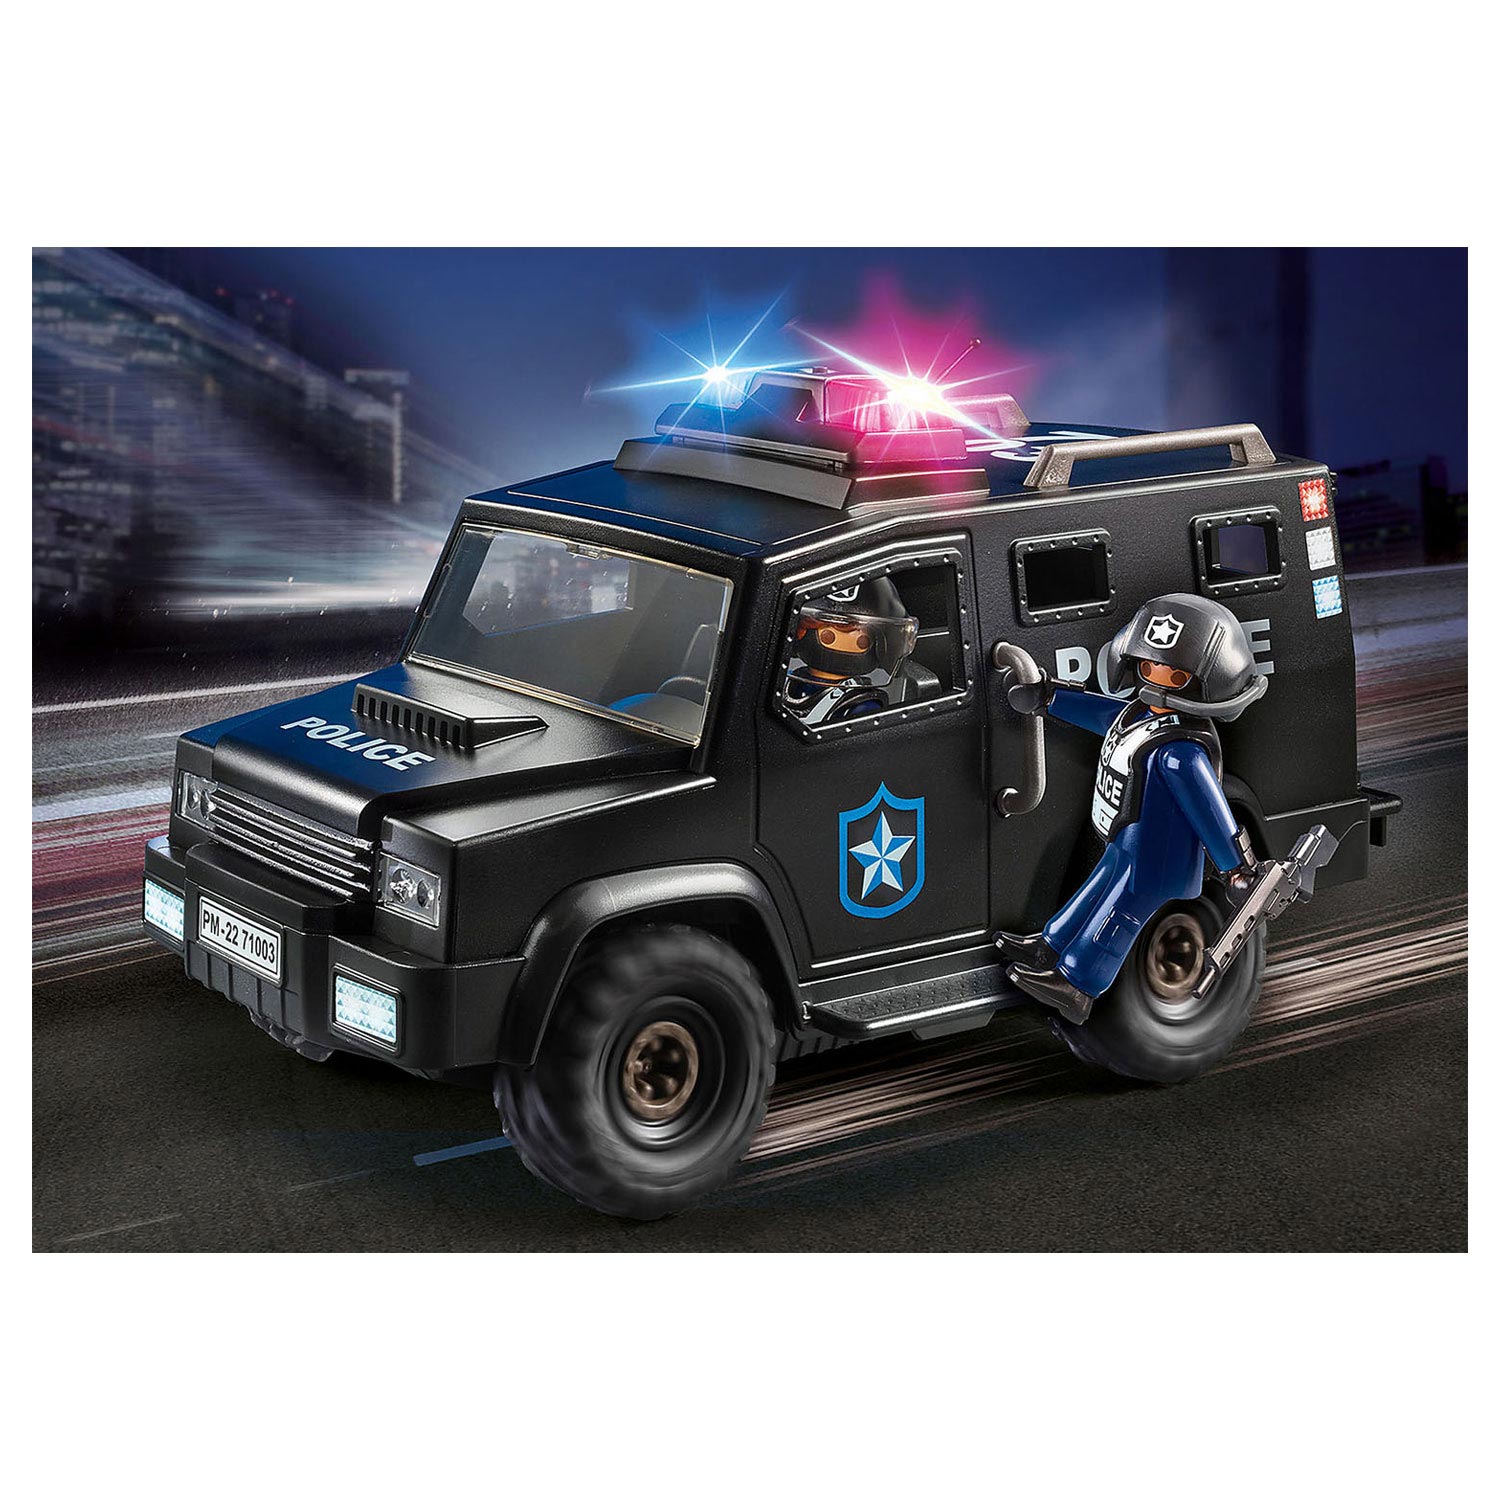 Playmobil City Action SIE-Team - 71003